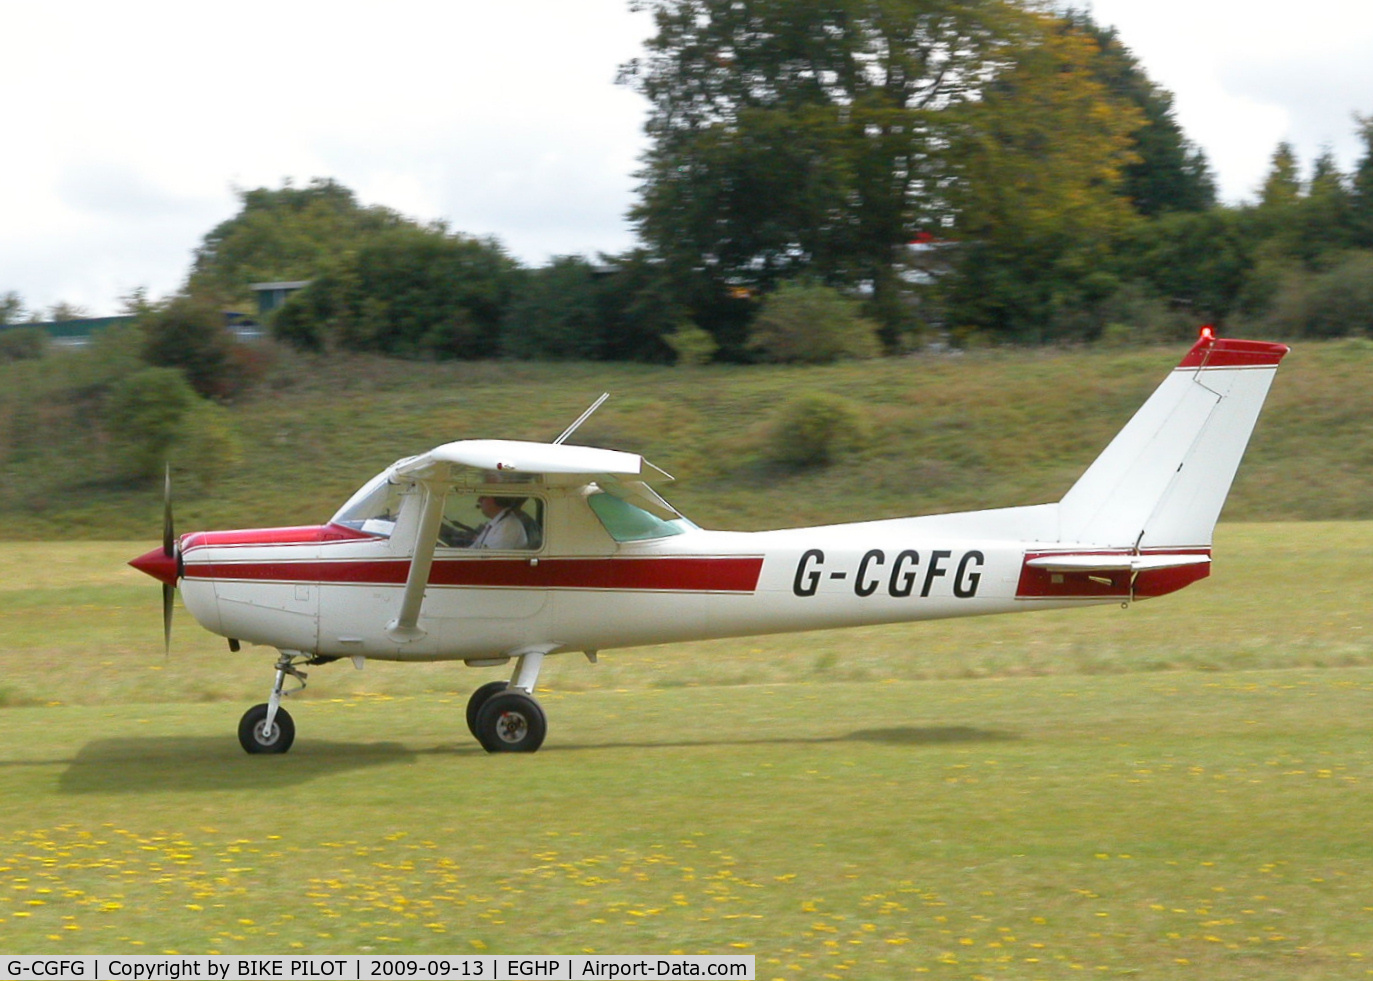 G-CGFG, 1983 Cessna 152 C/N 15285724, ARRIVING RWY 03, PREV. REG, N94559.  POPHAM RUSSIAN AIRCRAFT FLY-IN